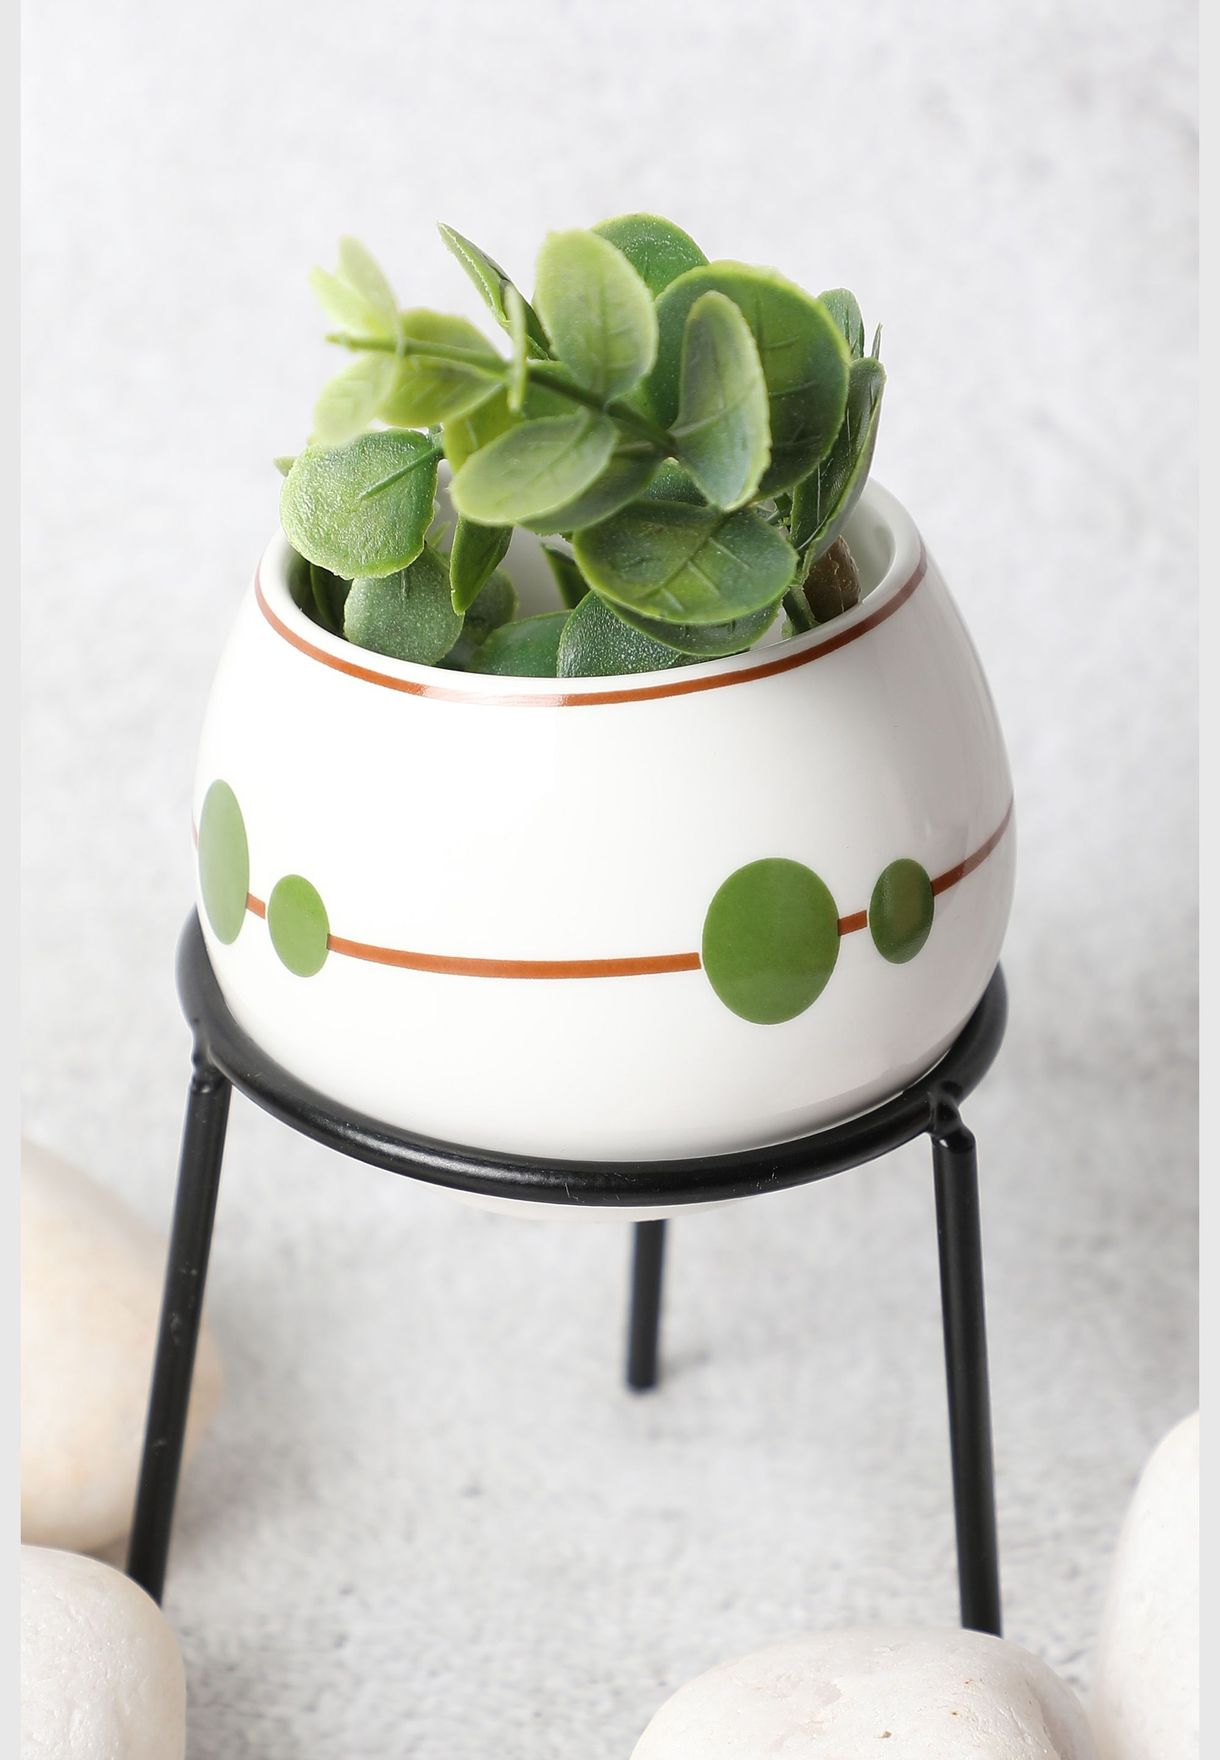 Printed Medium Ceramic Round Planter With Metal Stand For Home Decor 